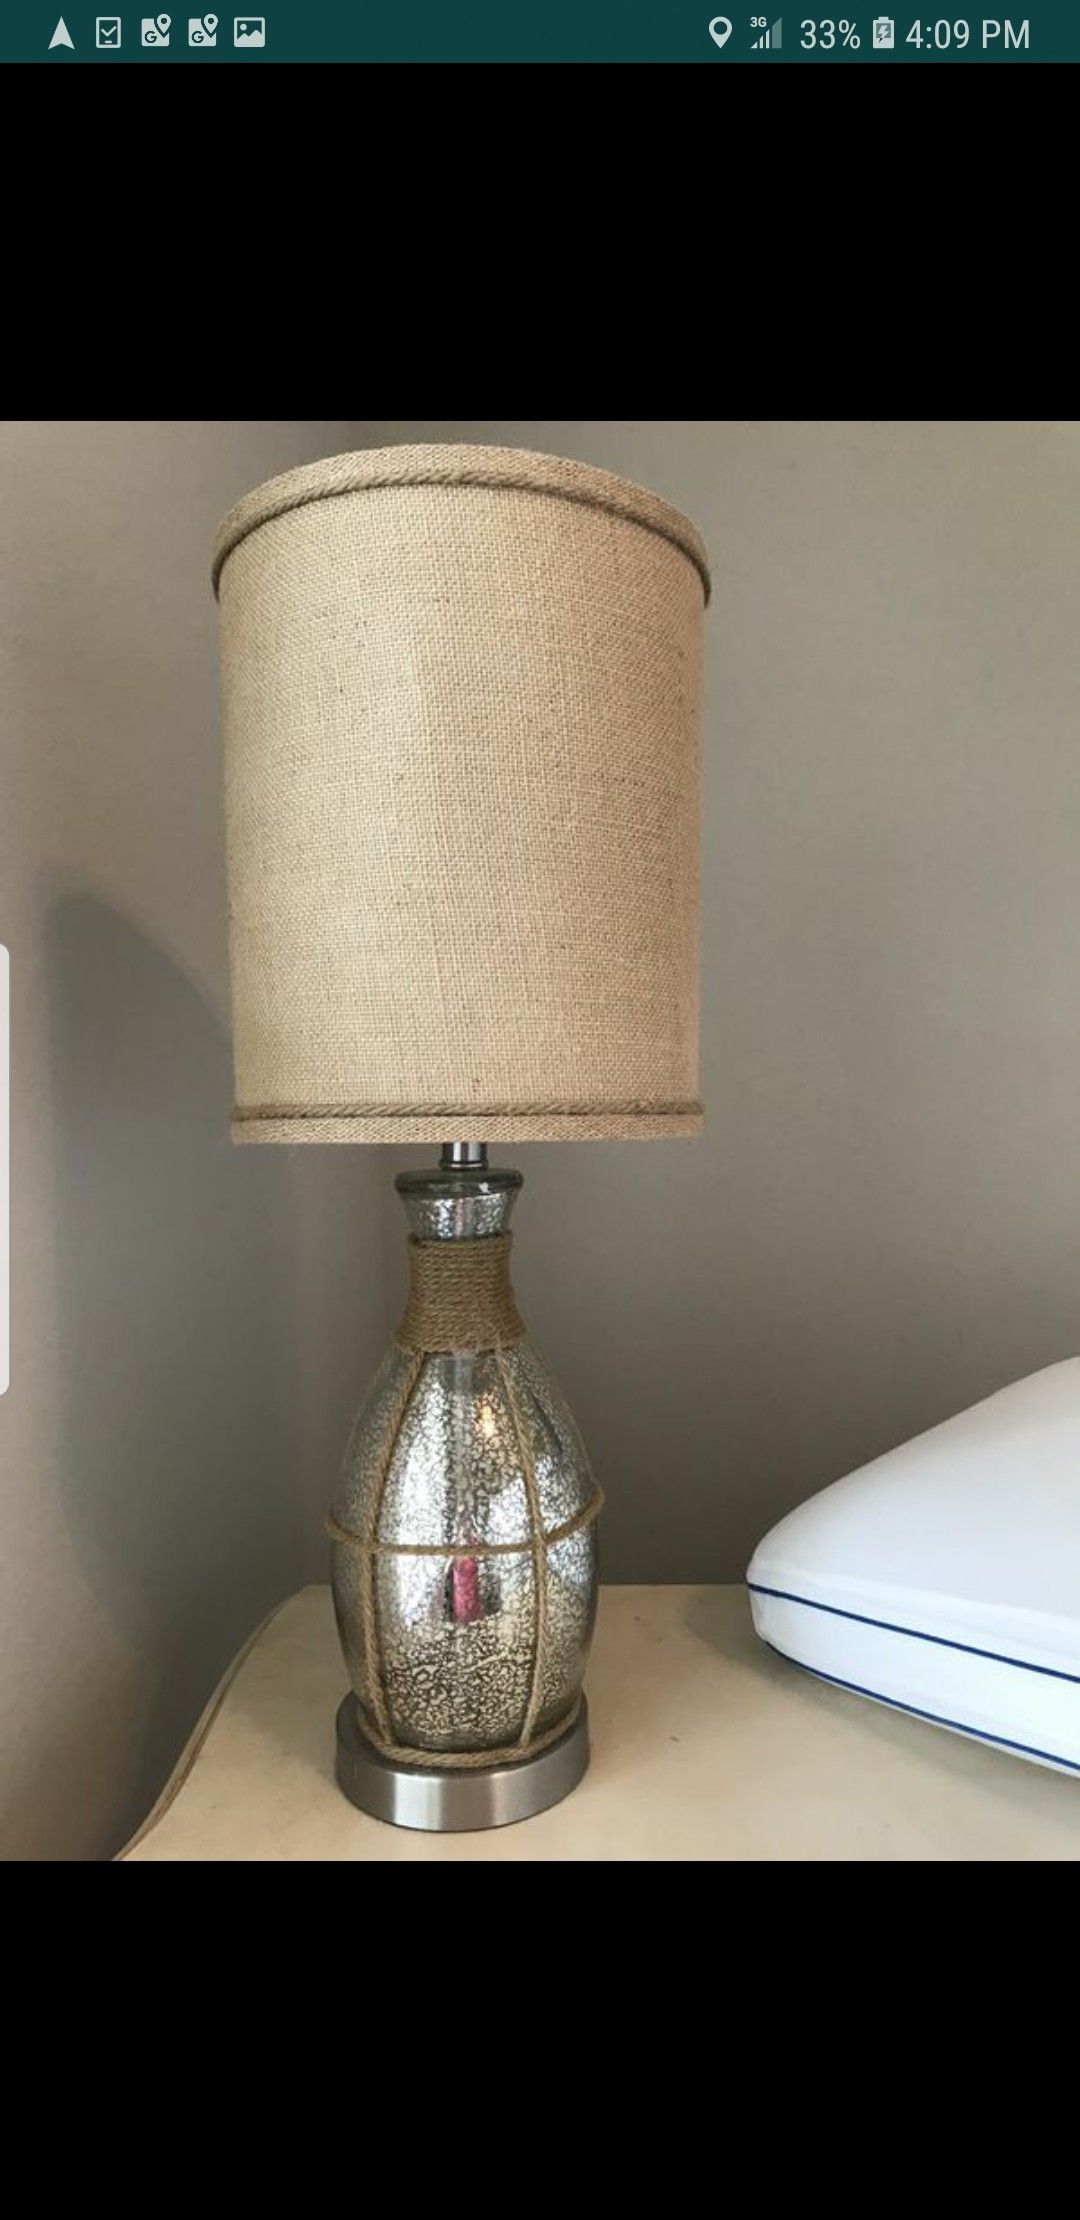 Burlap shade vintage style lamp